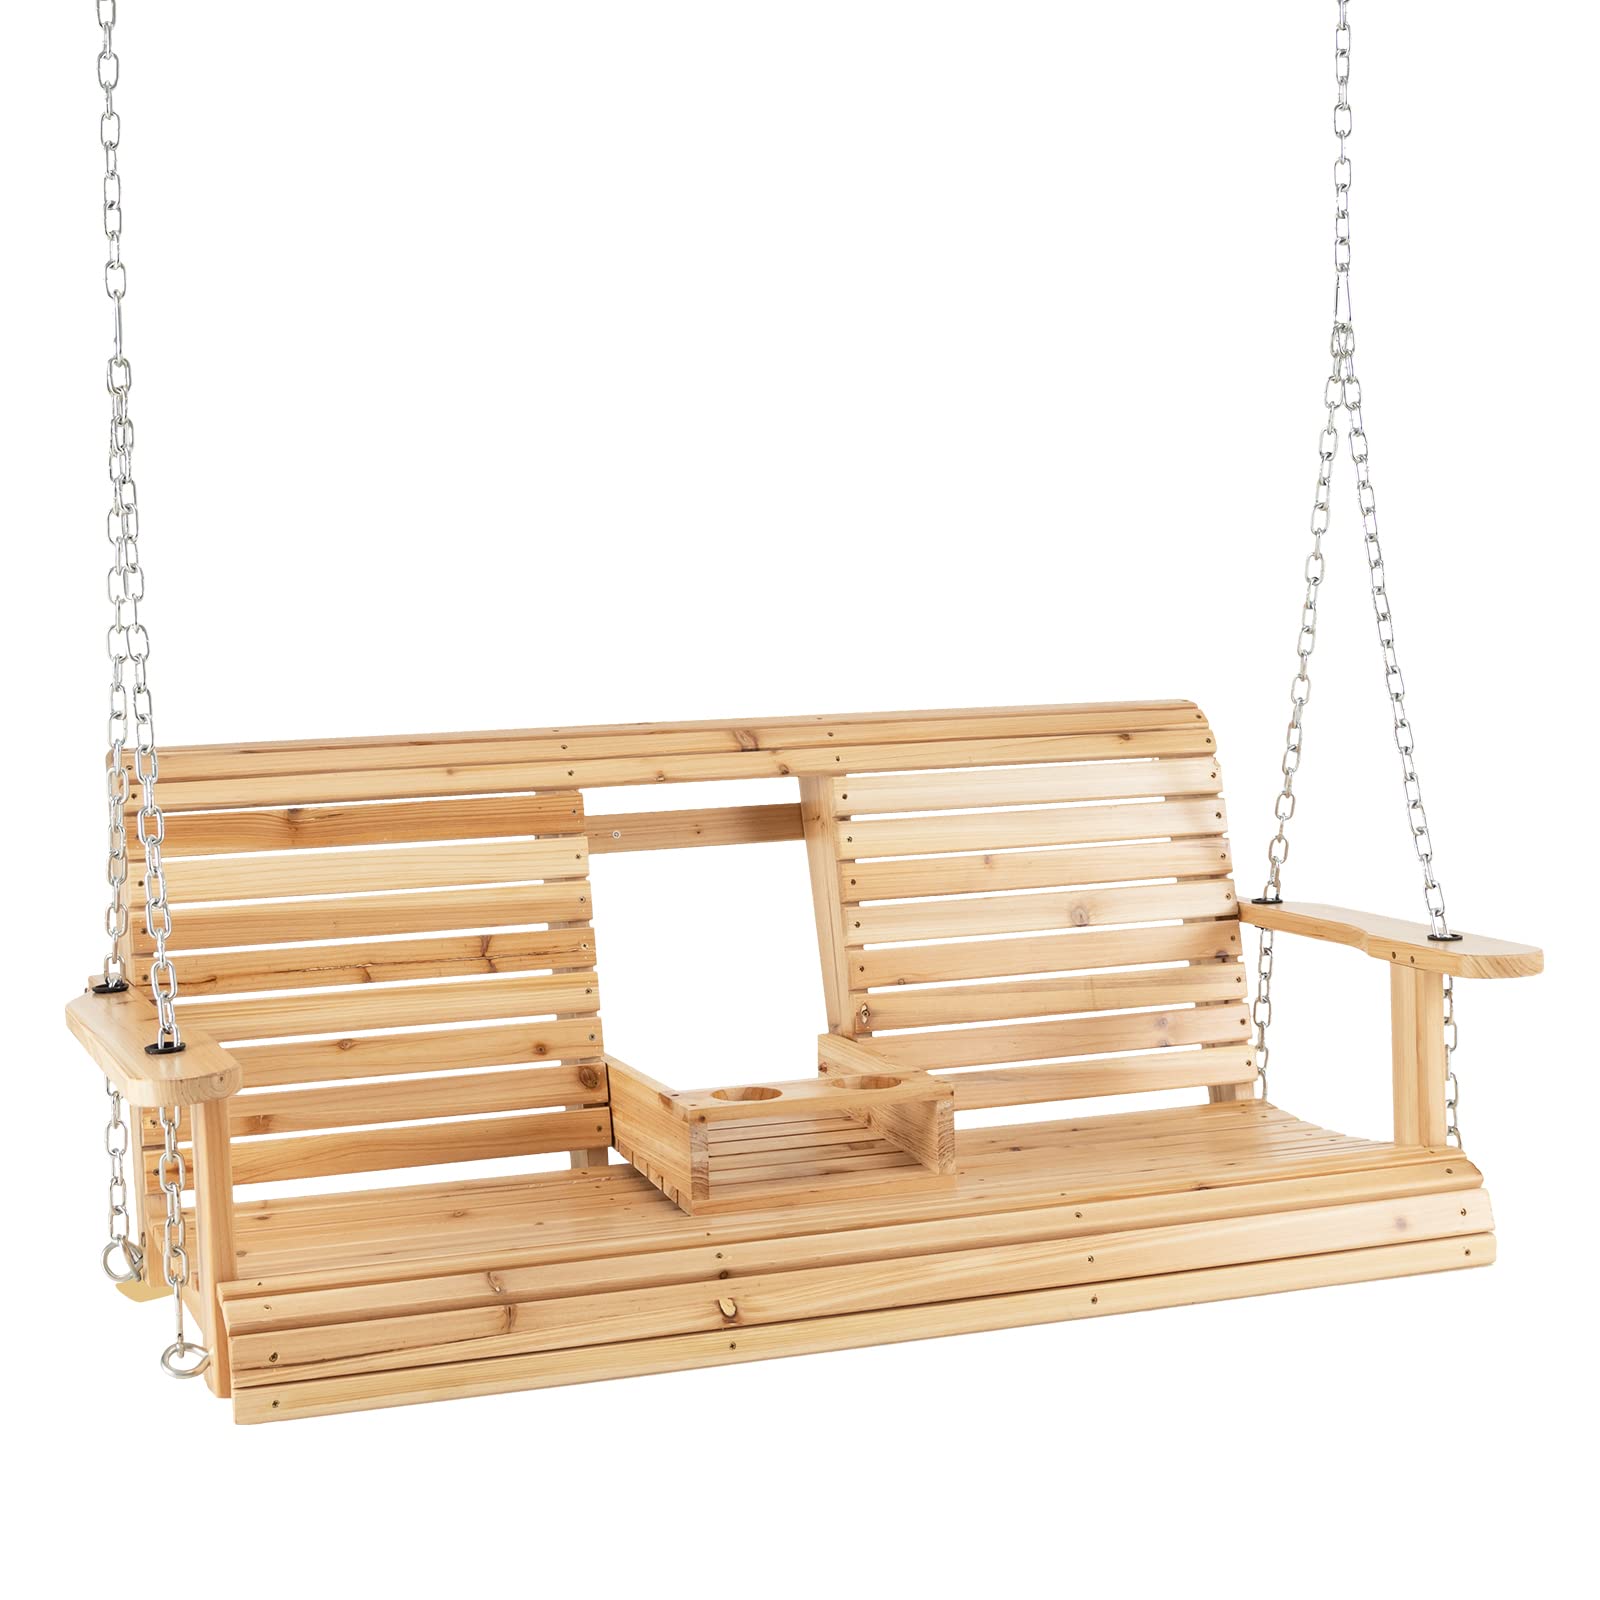 Giantex Outdoor Hanging Porch Swing - 2-Seat Wood Swing Bench